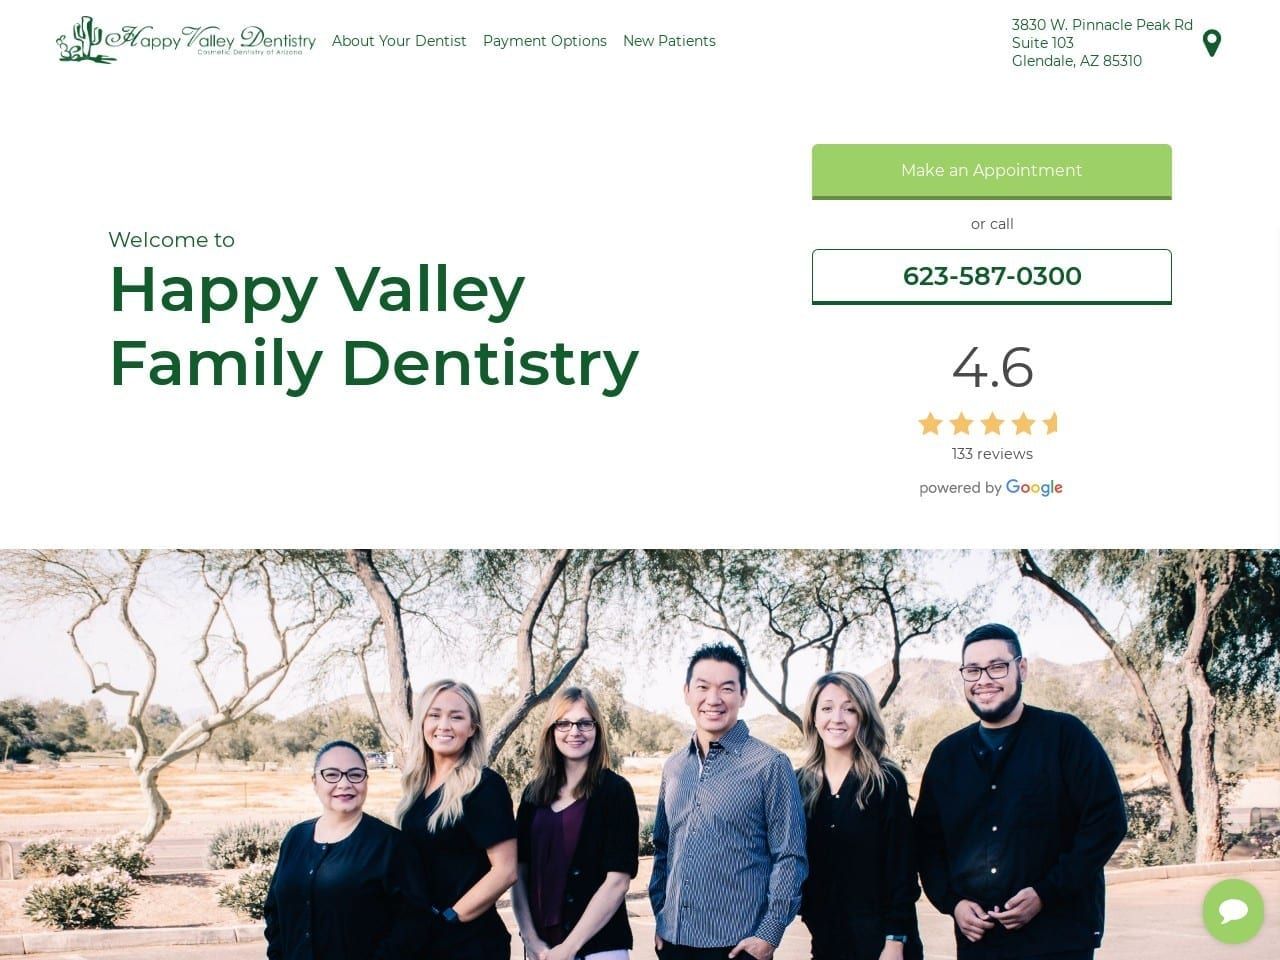 Happyvalley Dentistry Website Screenshot from happyvalleydentistry.com